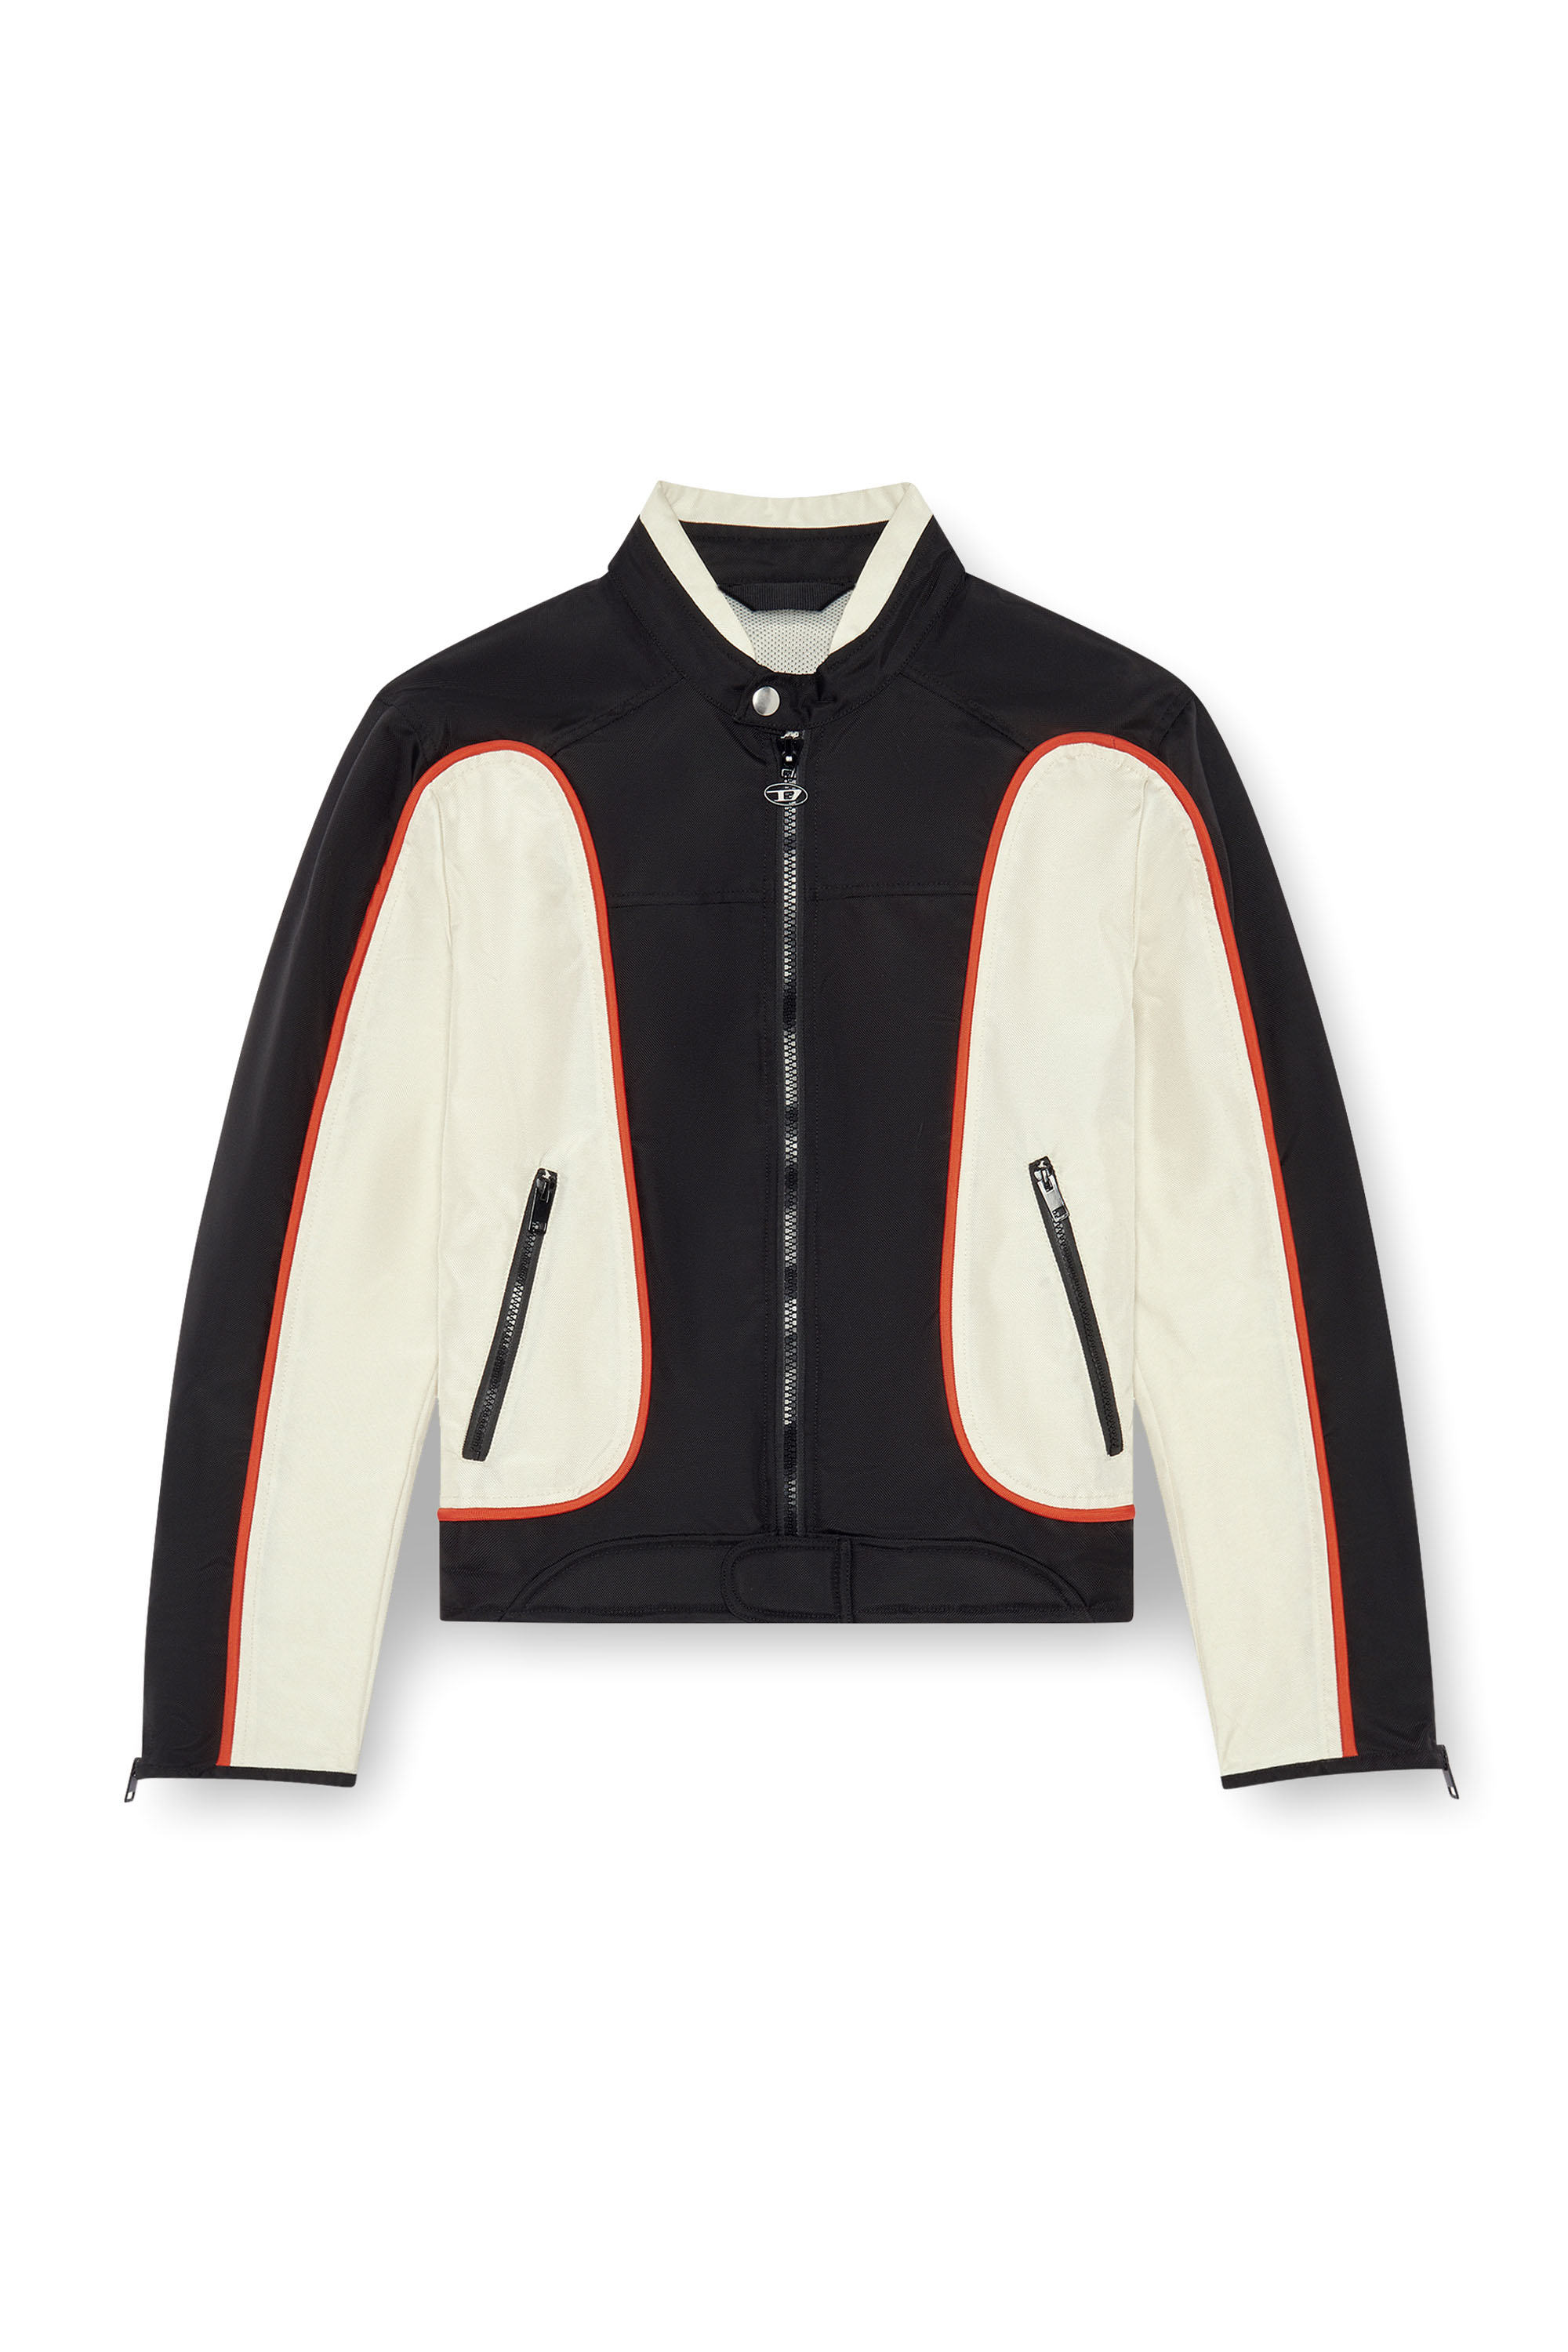 Diesel - J-BLINK, Man Biker jacket in colour-block nylon in Multicolor - Image 5